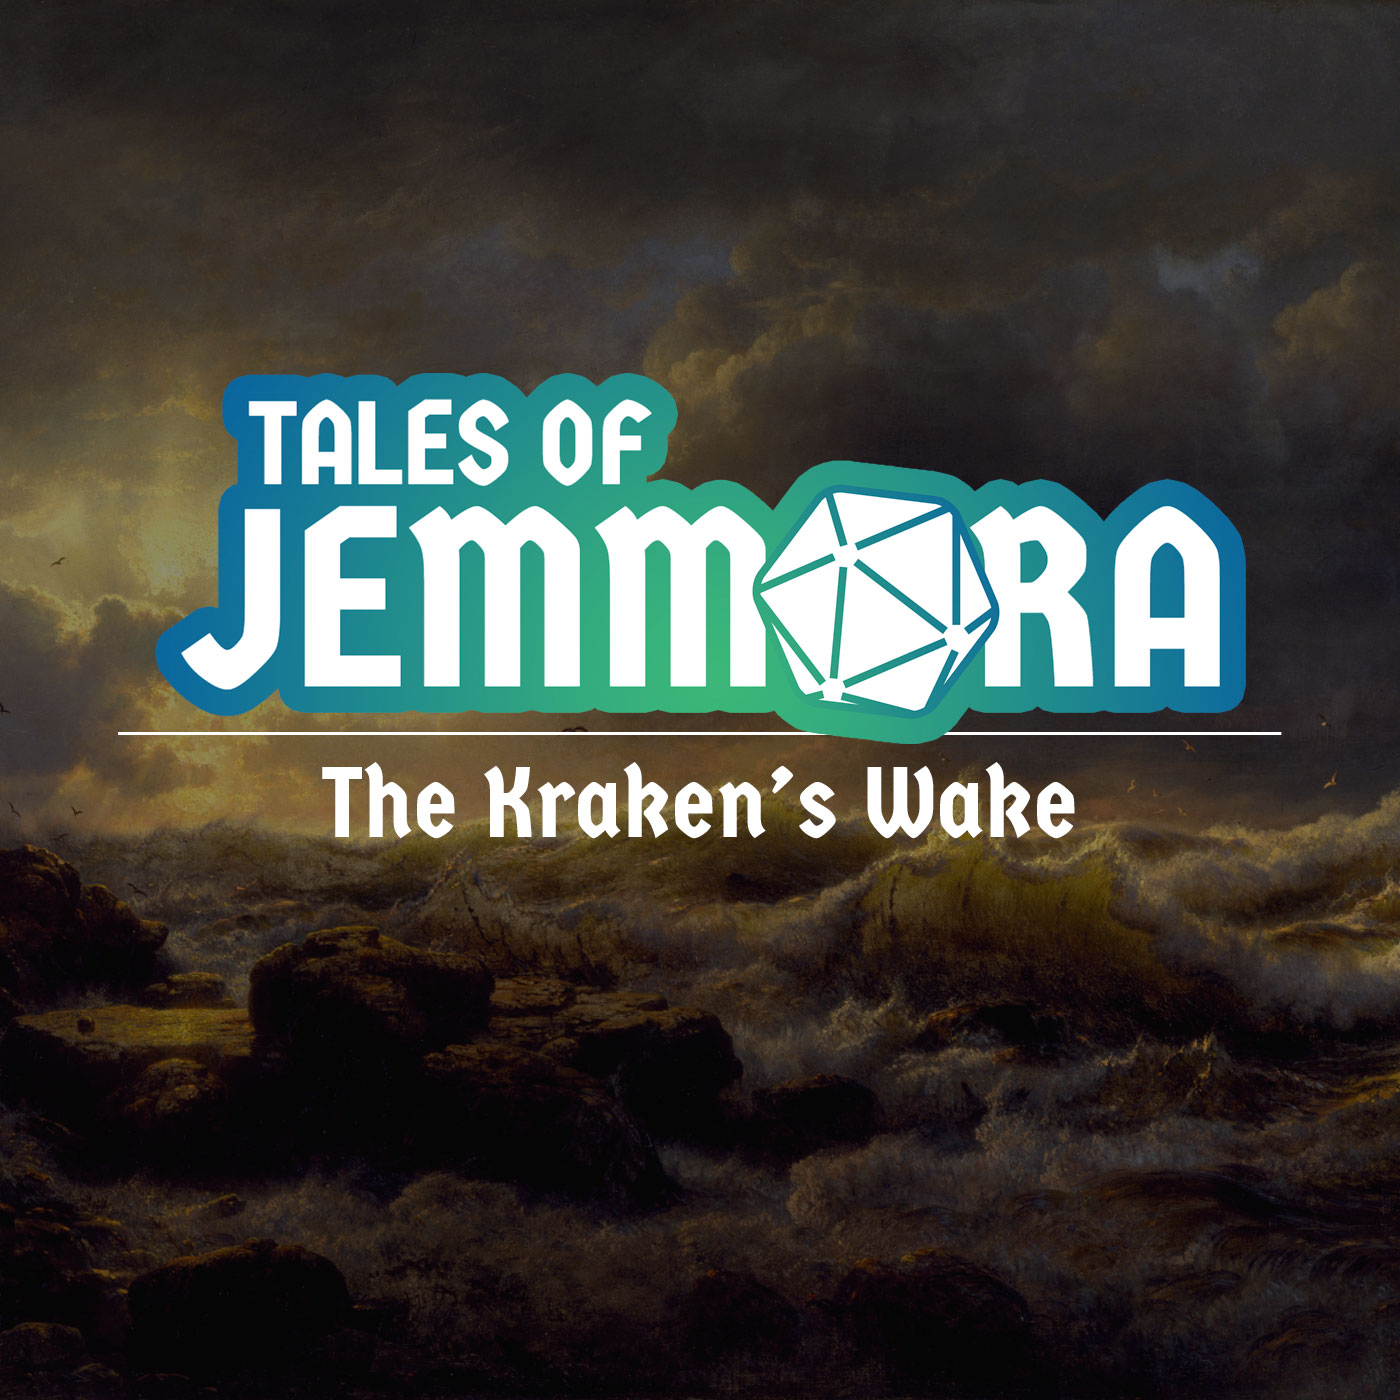 Tales of Jemmora